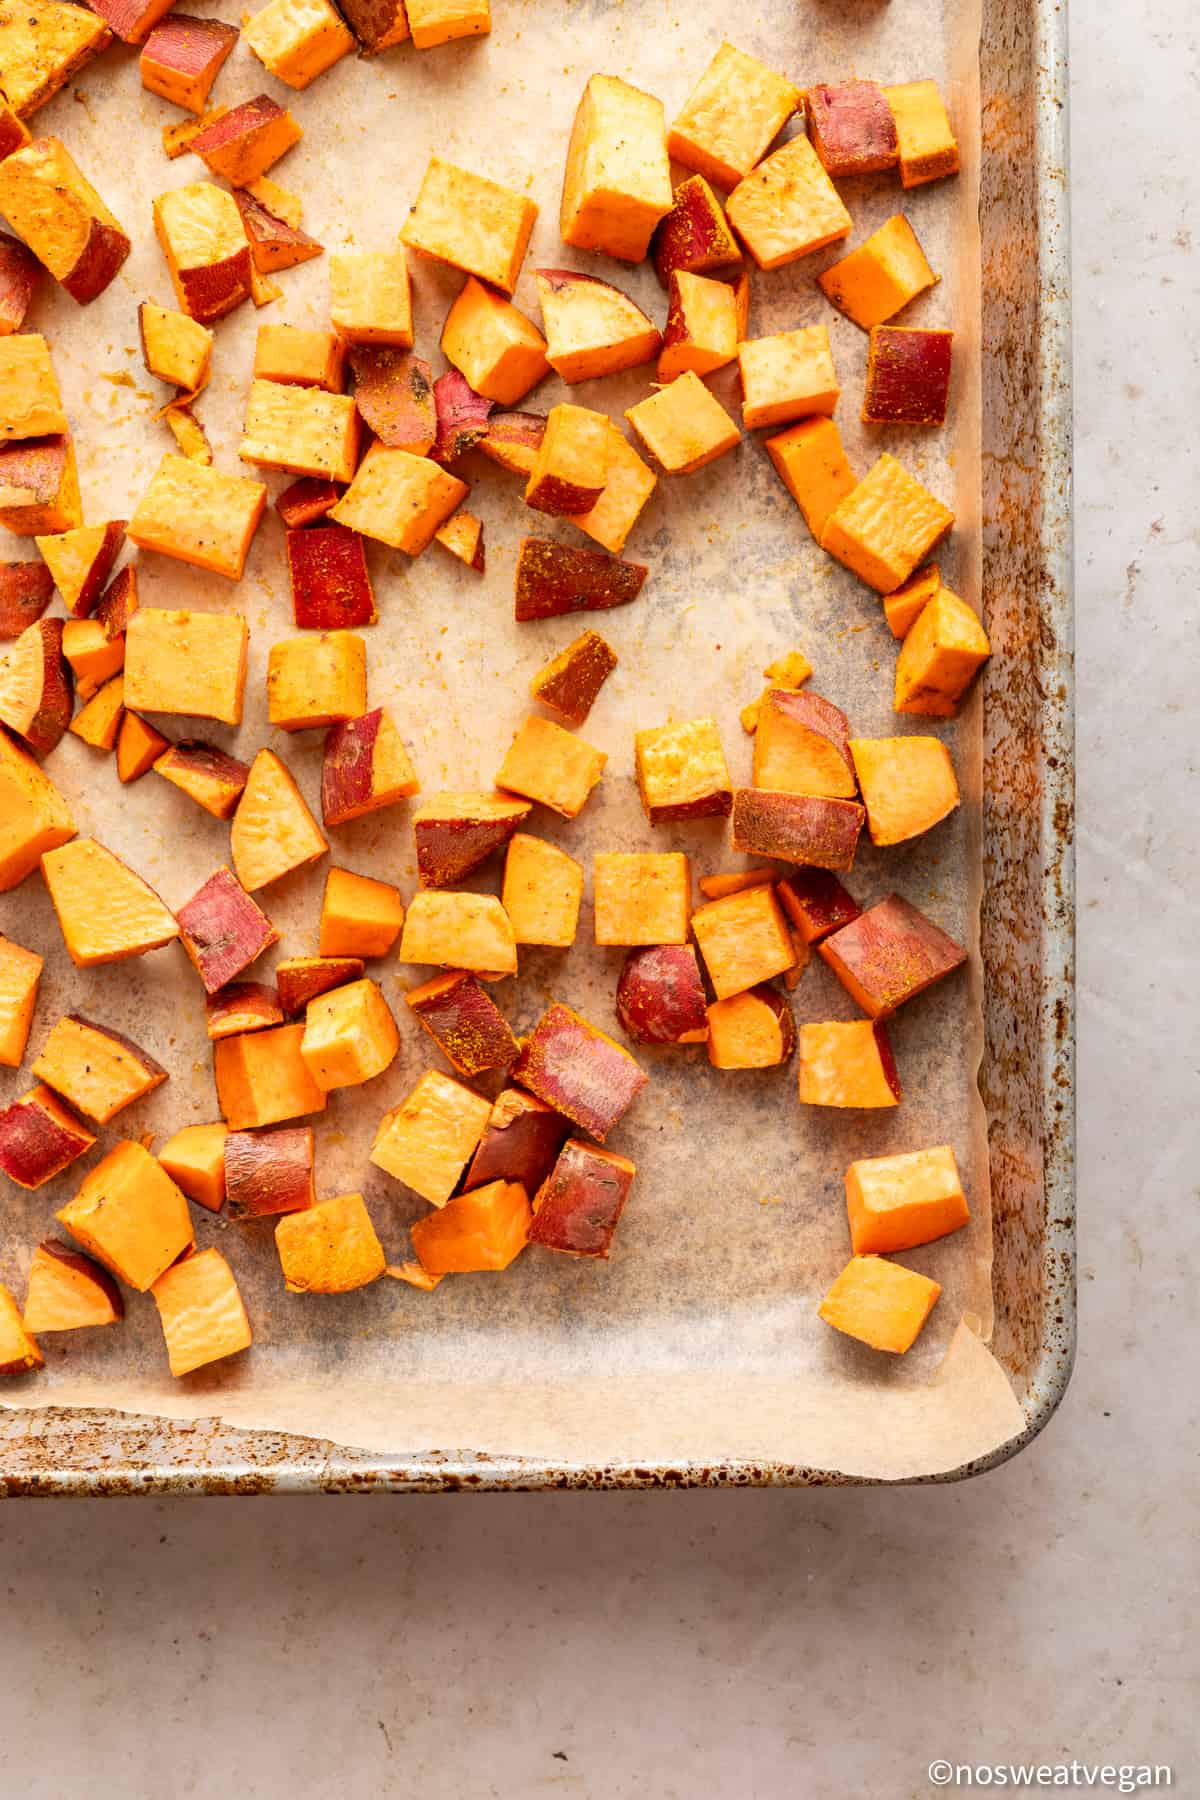 Roasted sweet potato cubes on a baking sheet.